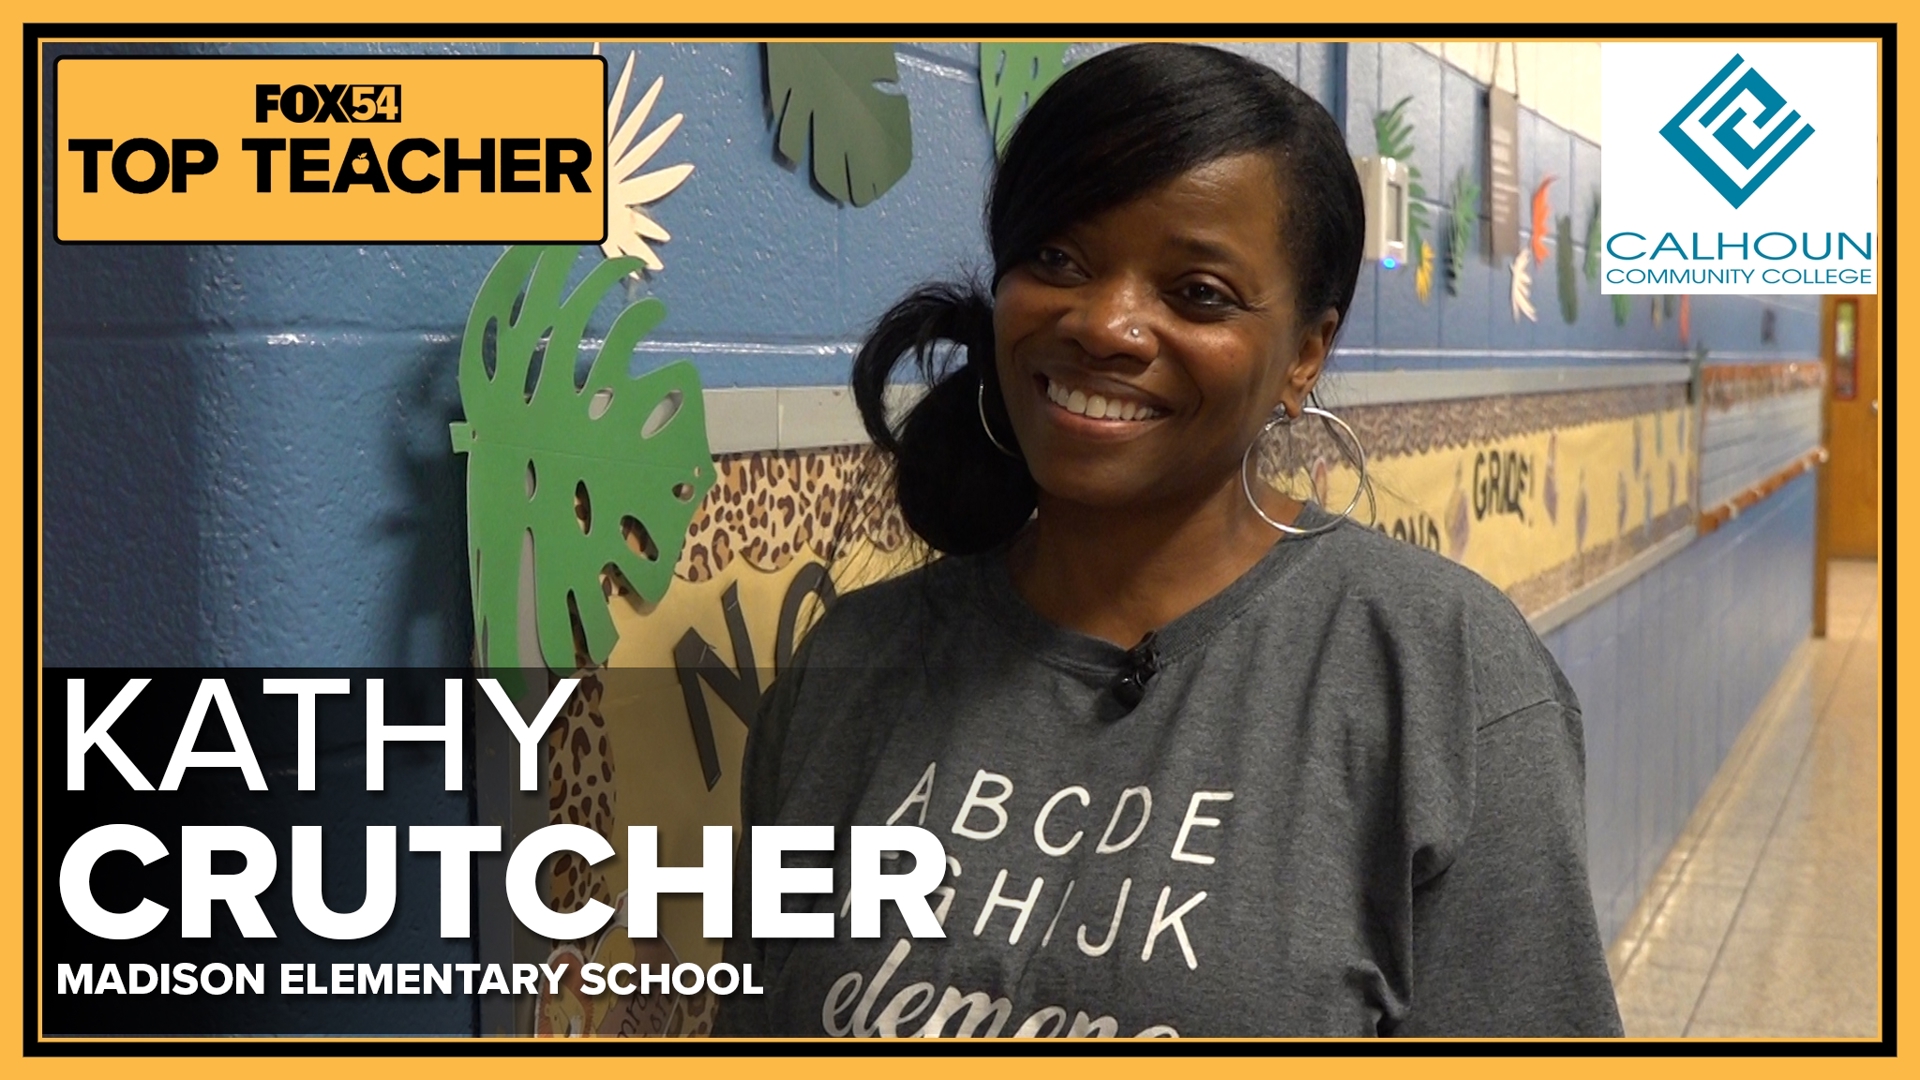 Kathy Crutcher is a teacher at Madison Elementary School.